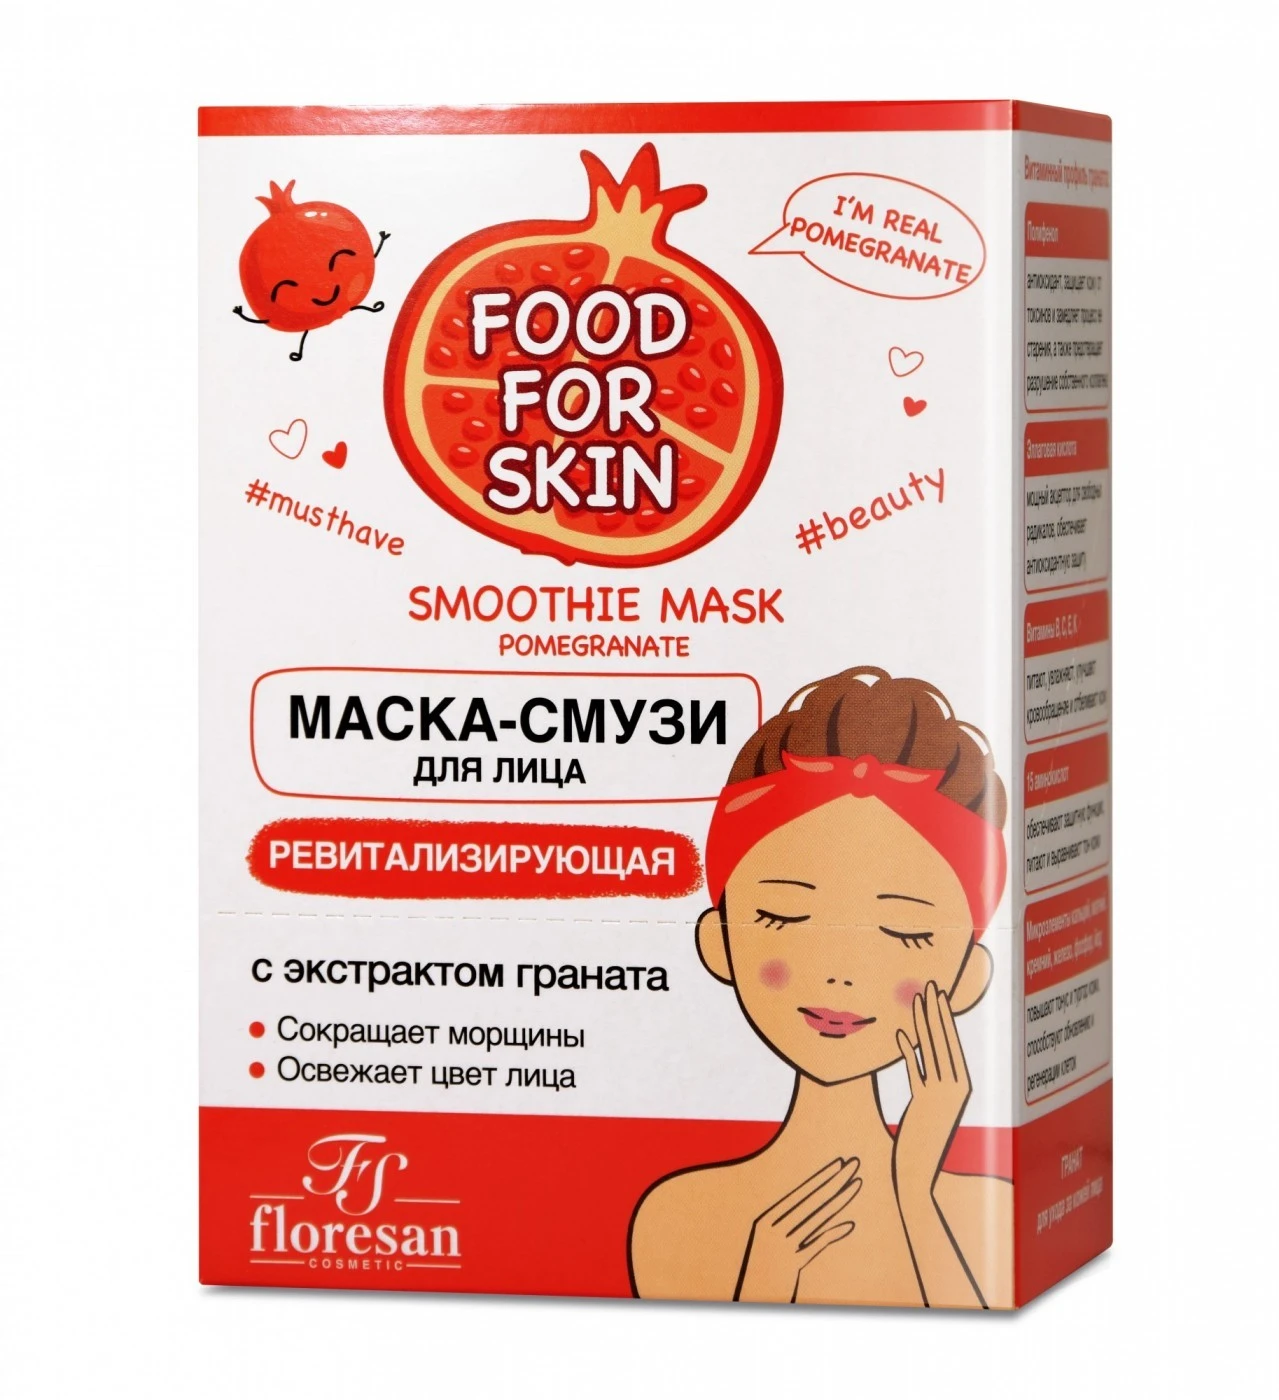 Floresan Food for skin ГРАНАТ МАСКА для лица РЕВИТАЛИЗИРУЮЩАЯ, 15мл*10шт,